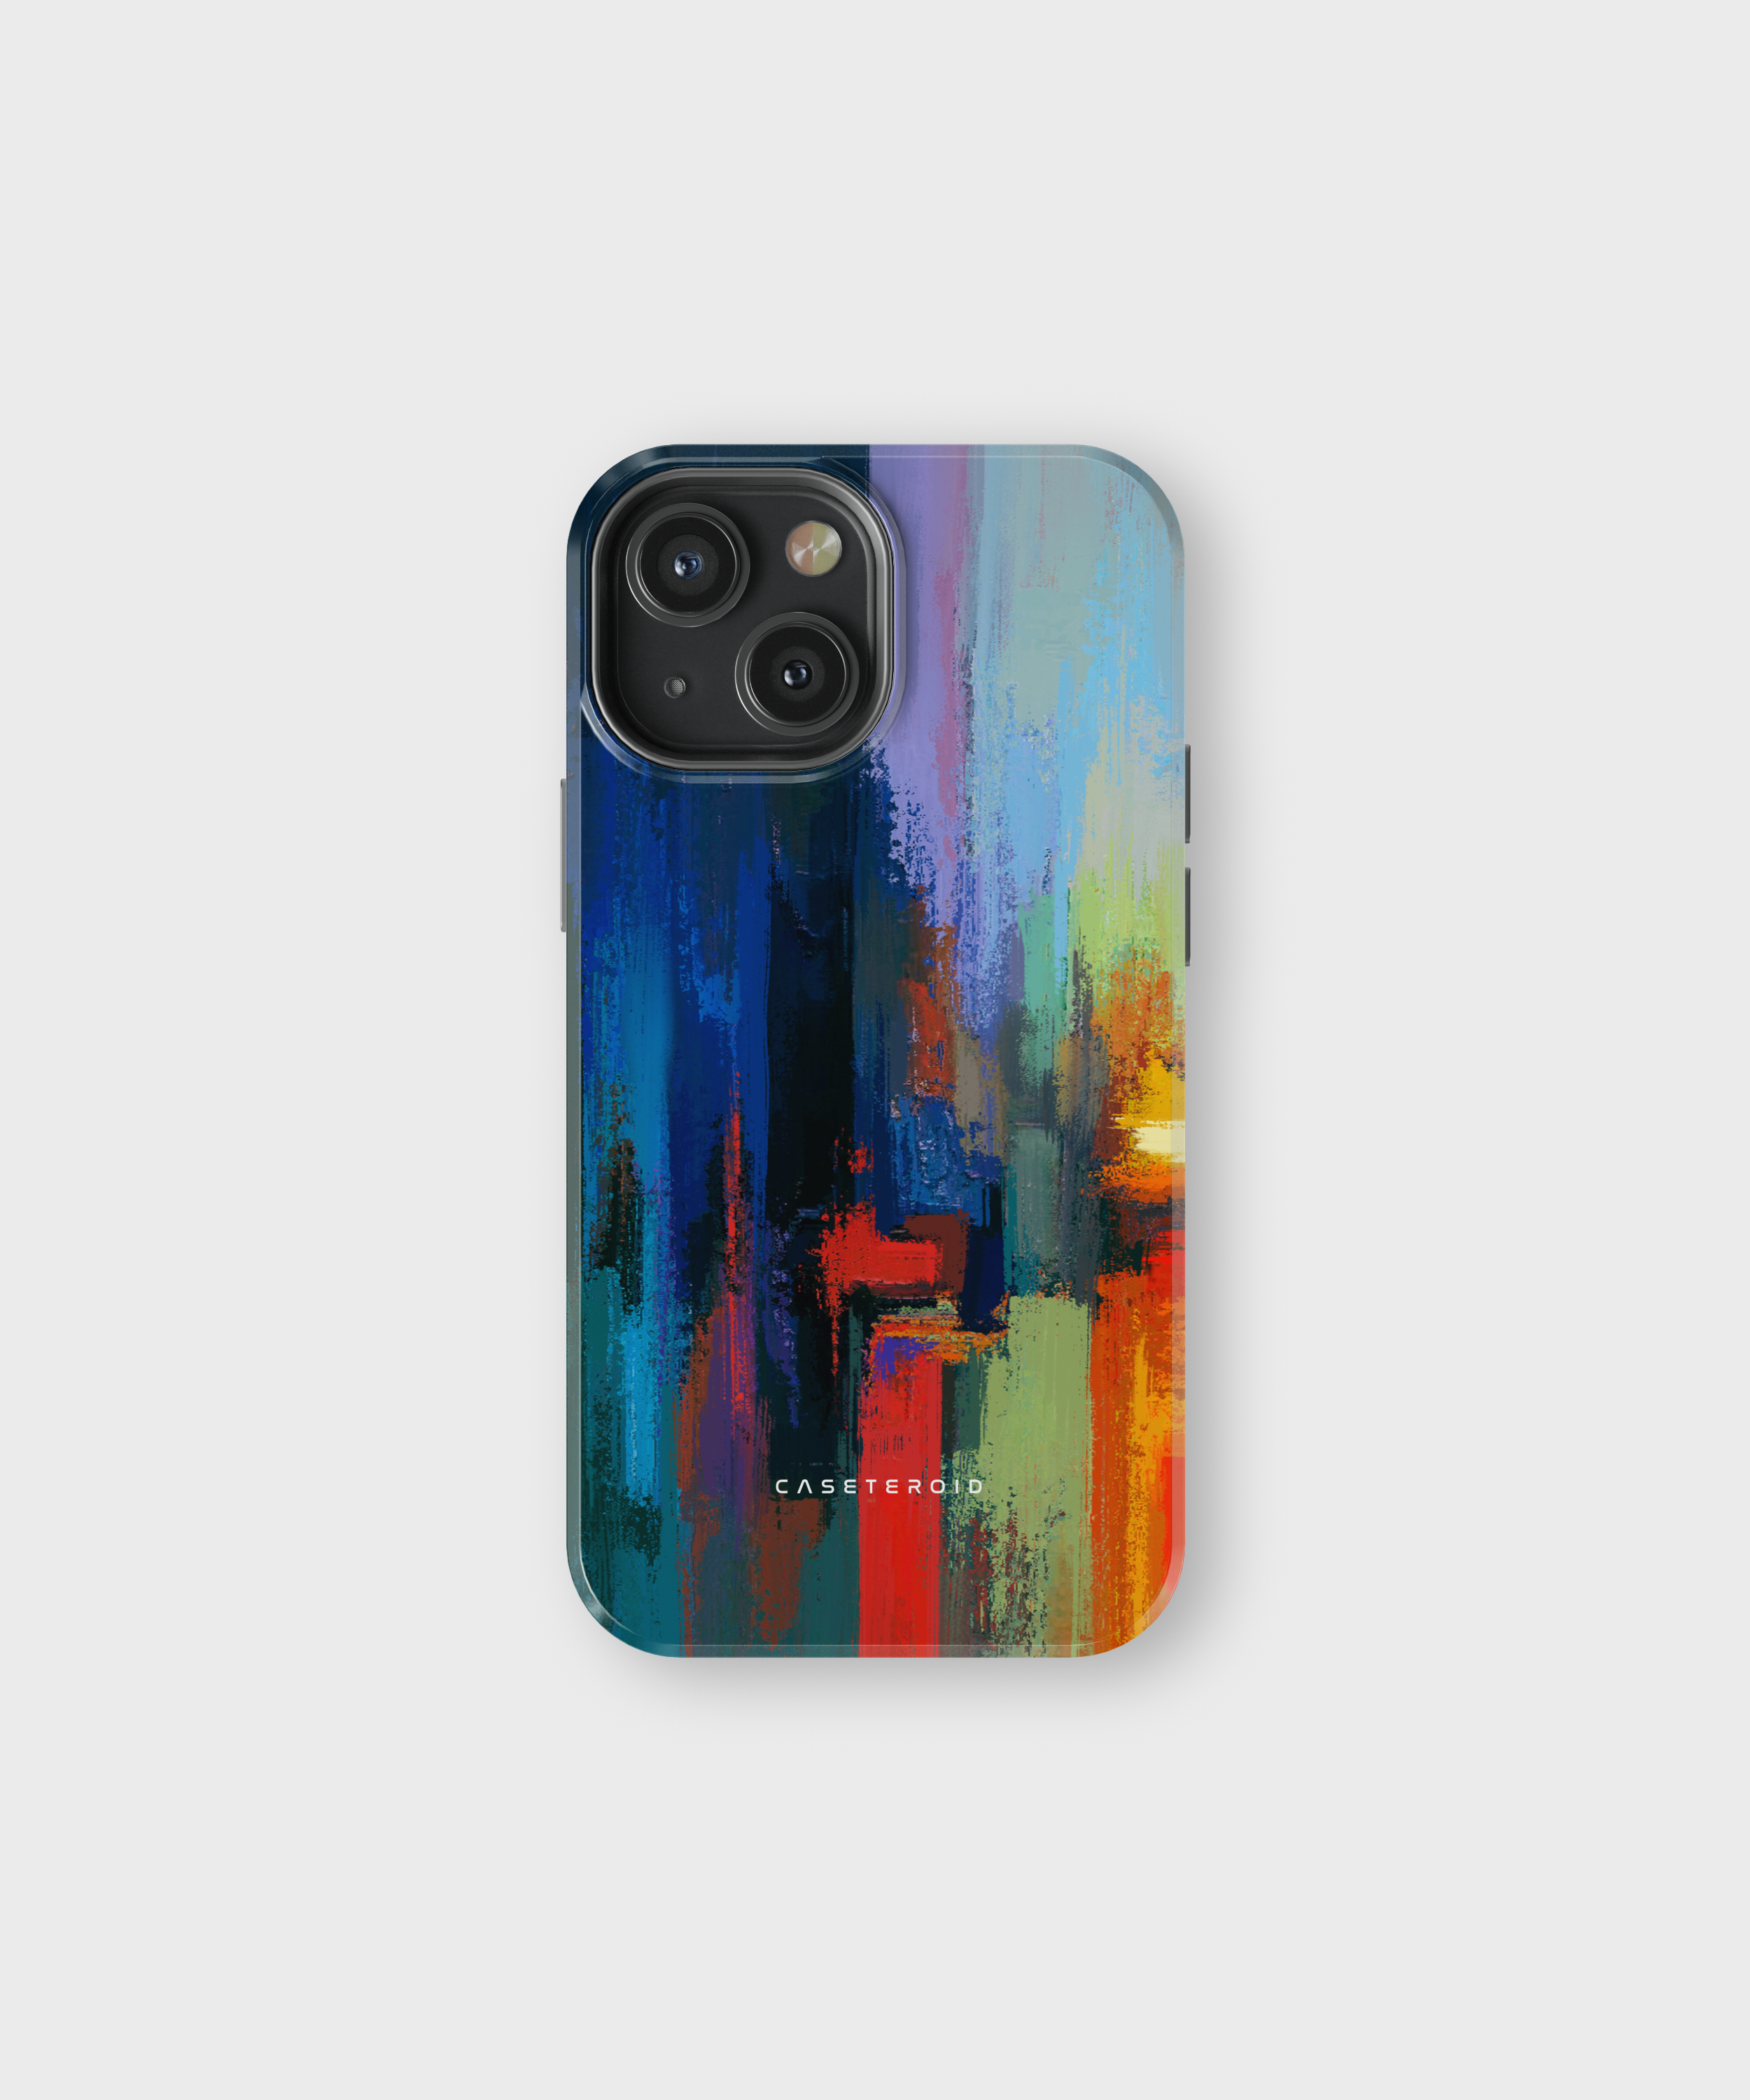 iPhone Tough Case - Rainbow Canvas - CASETEROID